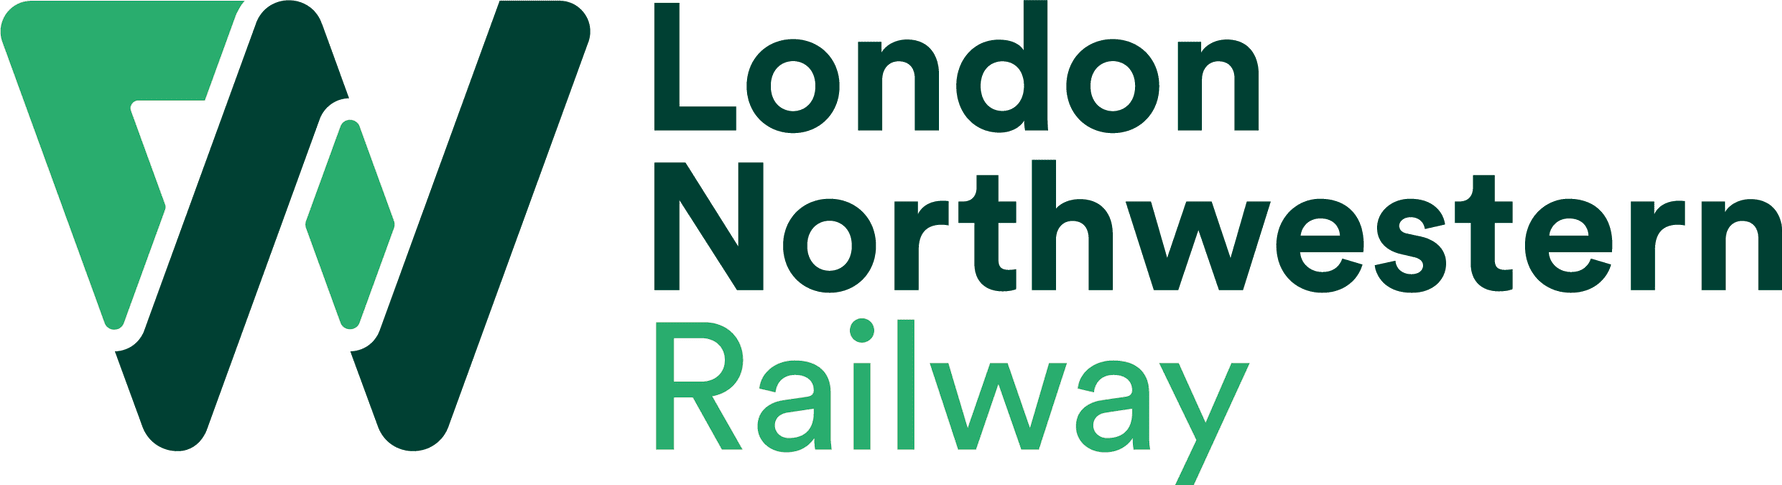 London Northwestern Railway: Train services to resume on Abbey Line